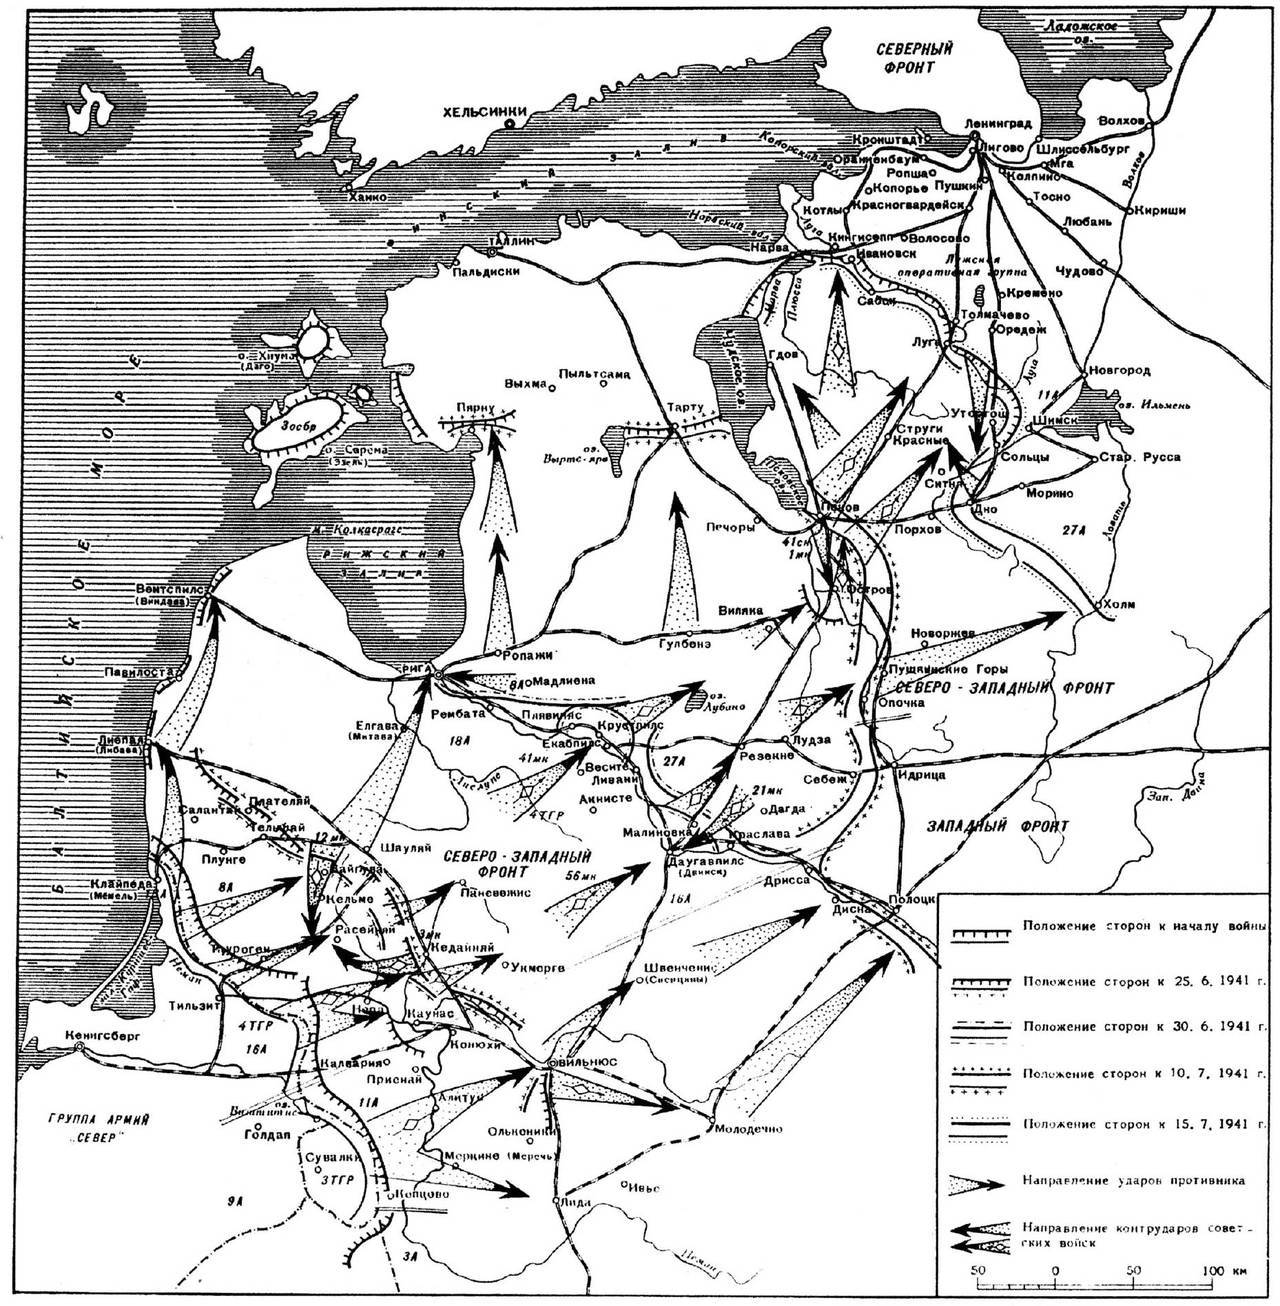 Начало войны 1941 западный фронт. Северо-Западный фронт 1941 карты. Северо-Западный фронт 1941 год карта боевых действий. Карта военных действий в 1941 году Северо-Западный фронт. Карта боевых действий на Западного военного округа 1941 года.